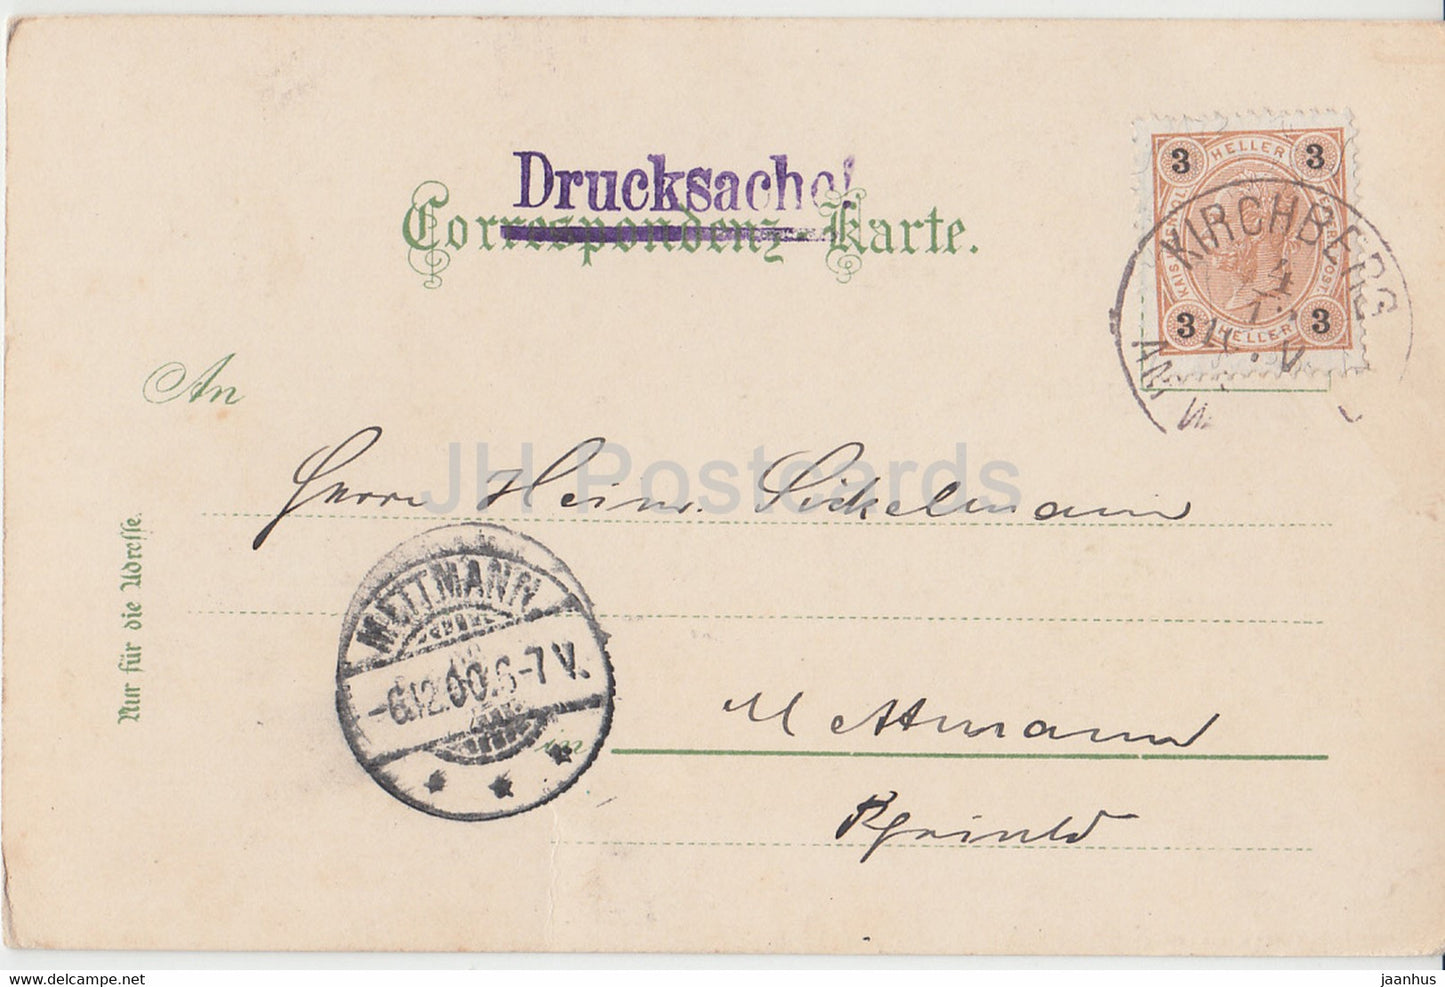 Gruss aus dem Semmering Gebiet - Polleroswand u Raxalp - Drucksache - old postcard - 1900 - Austria - used